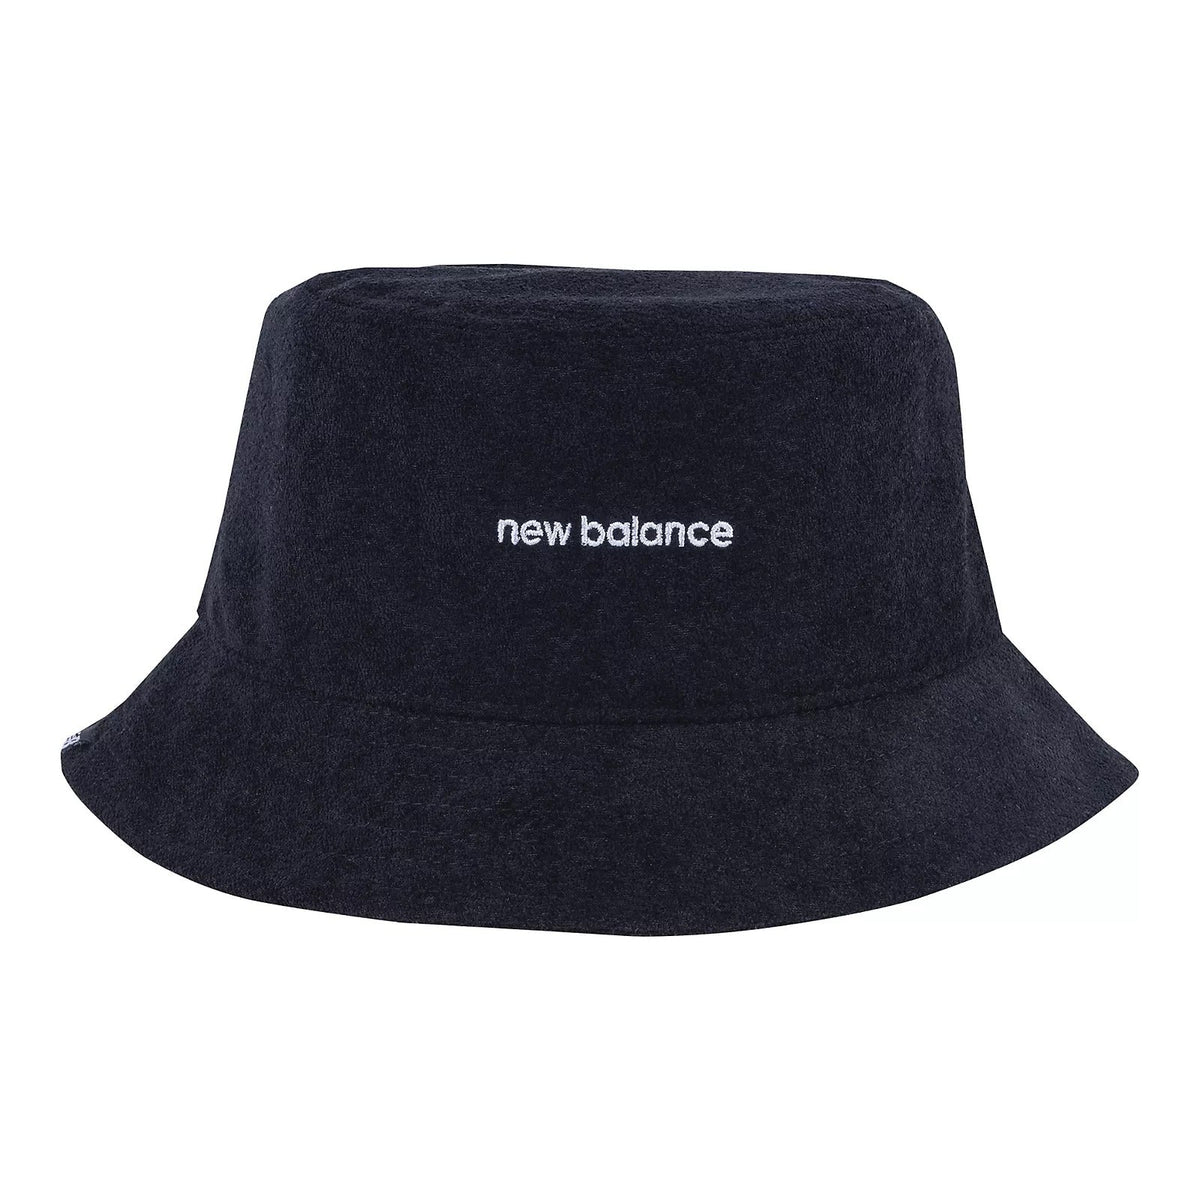 New Balance Terry Lifestyle Bucket Hat Black LAH21108-BLK - HEADWEAR - Canada